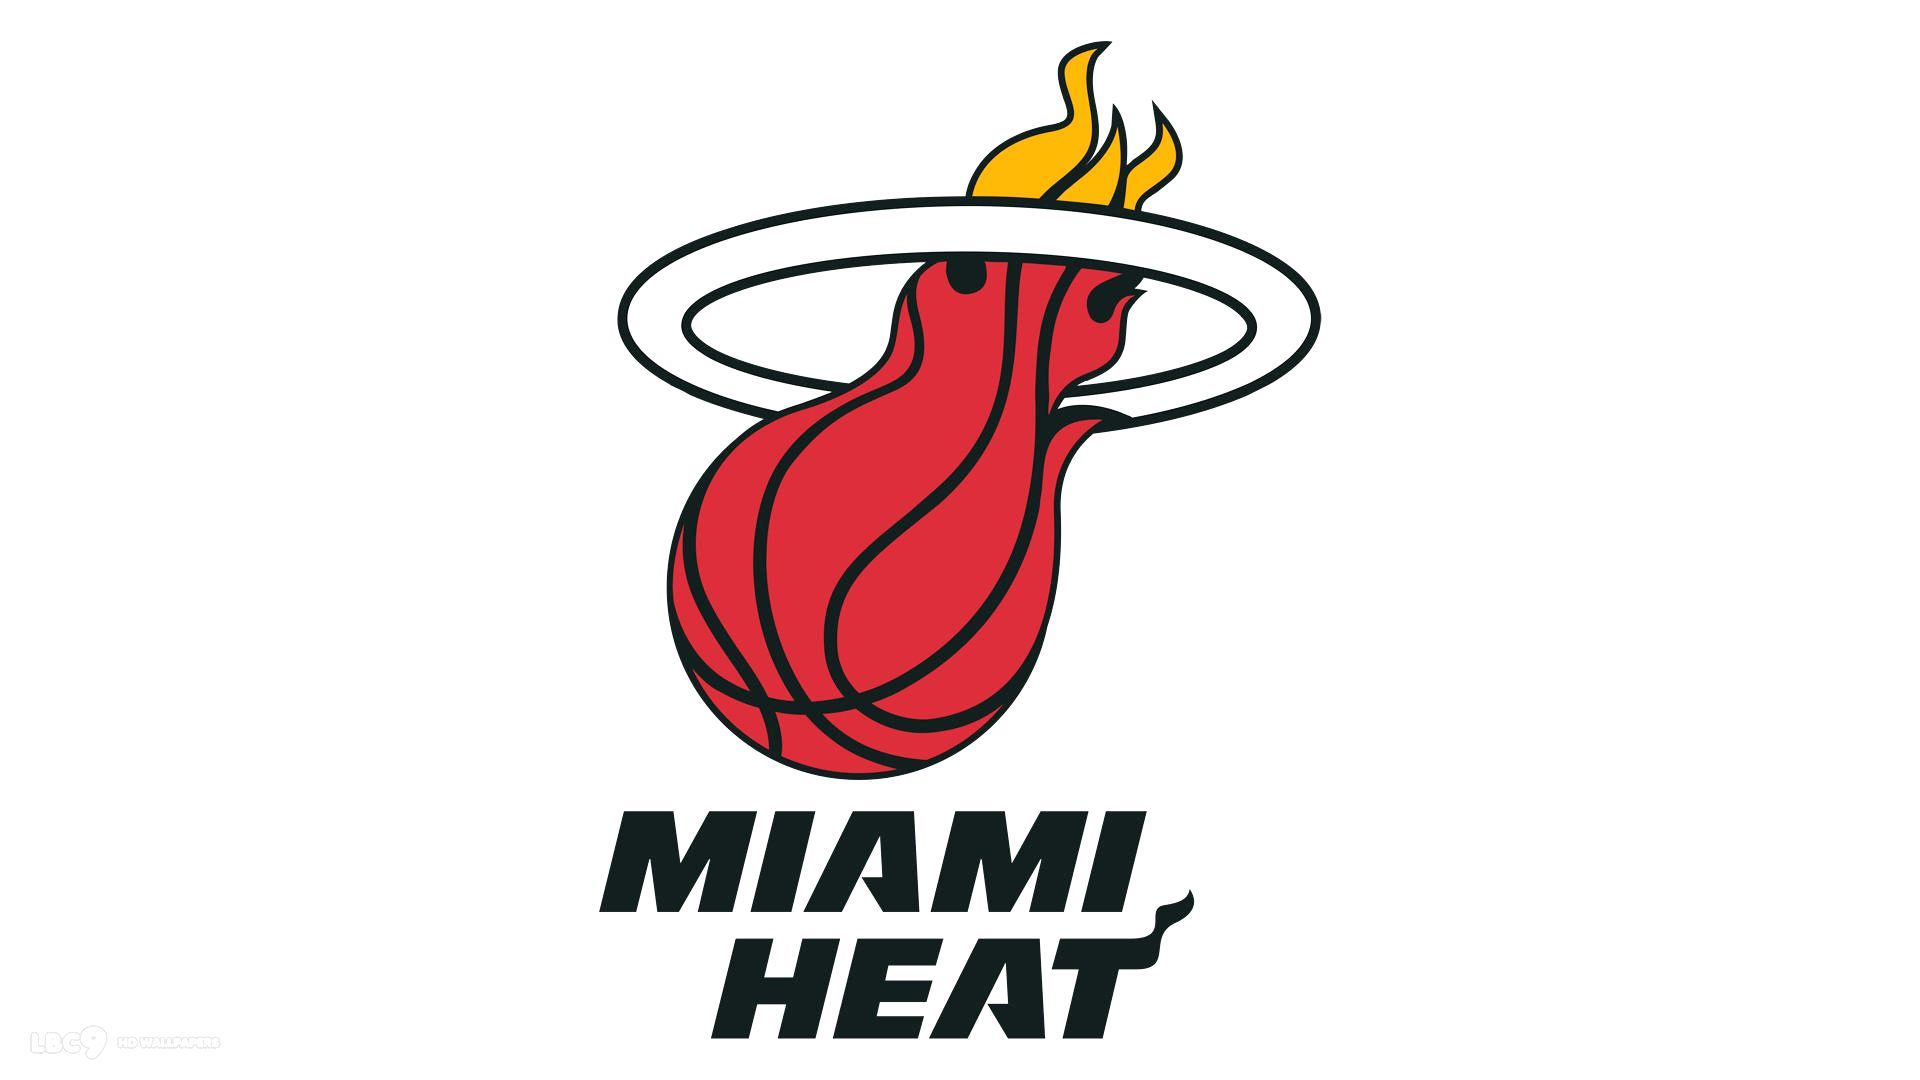 Miami Heat Predictions & 2019 NBA Futures Gambling Odds